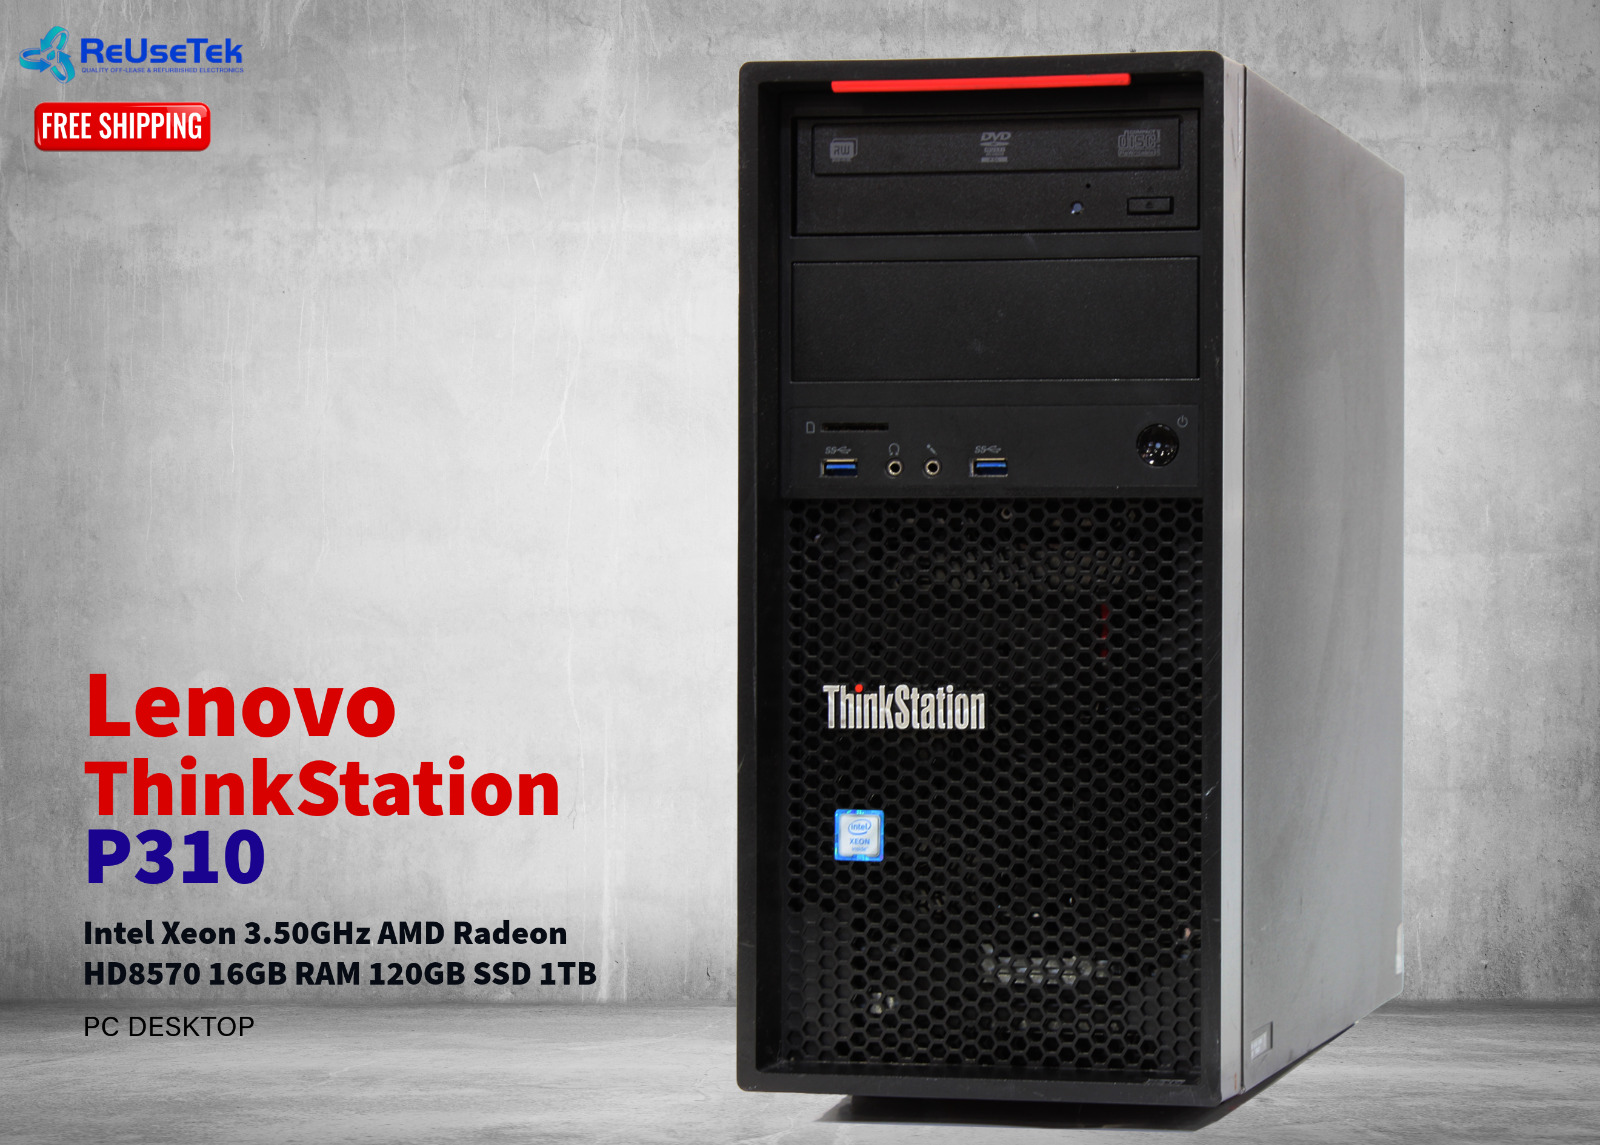 Lenovo ThinkStation P310 Intel Xeon 3.50GHz Radeon HD8570 16GB RAM 120GB SSD 1TB